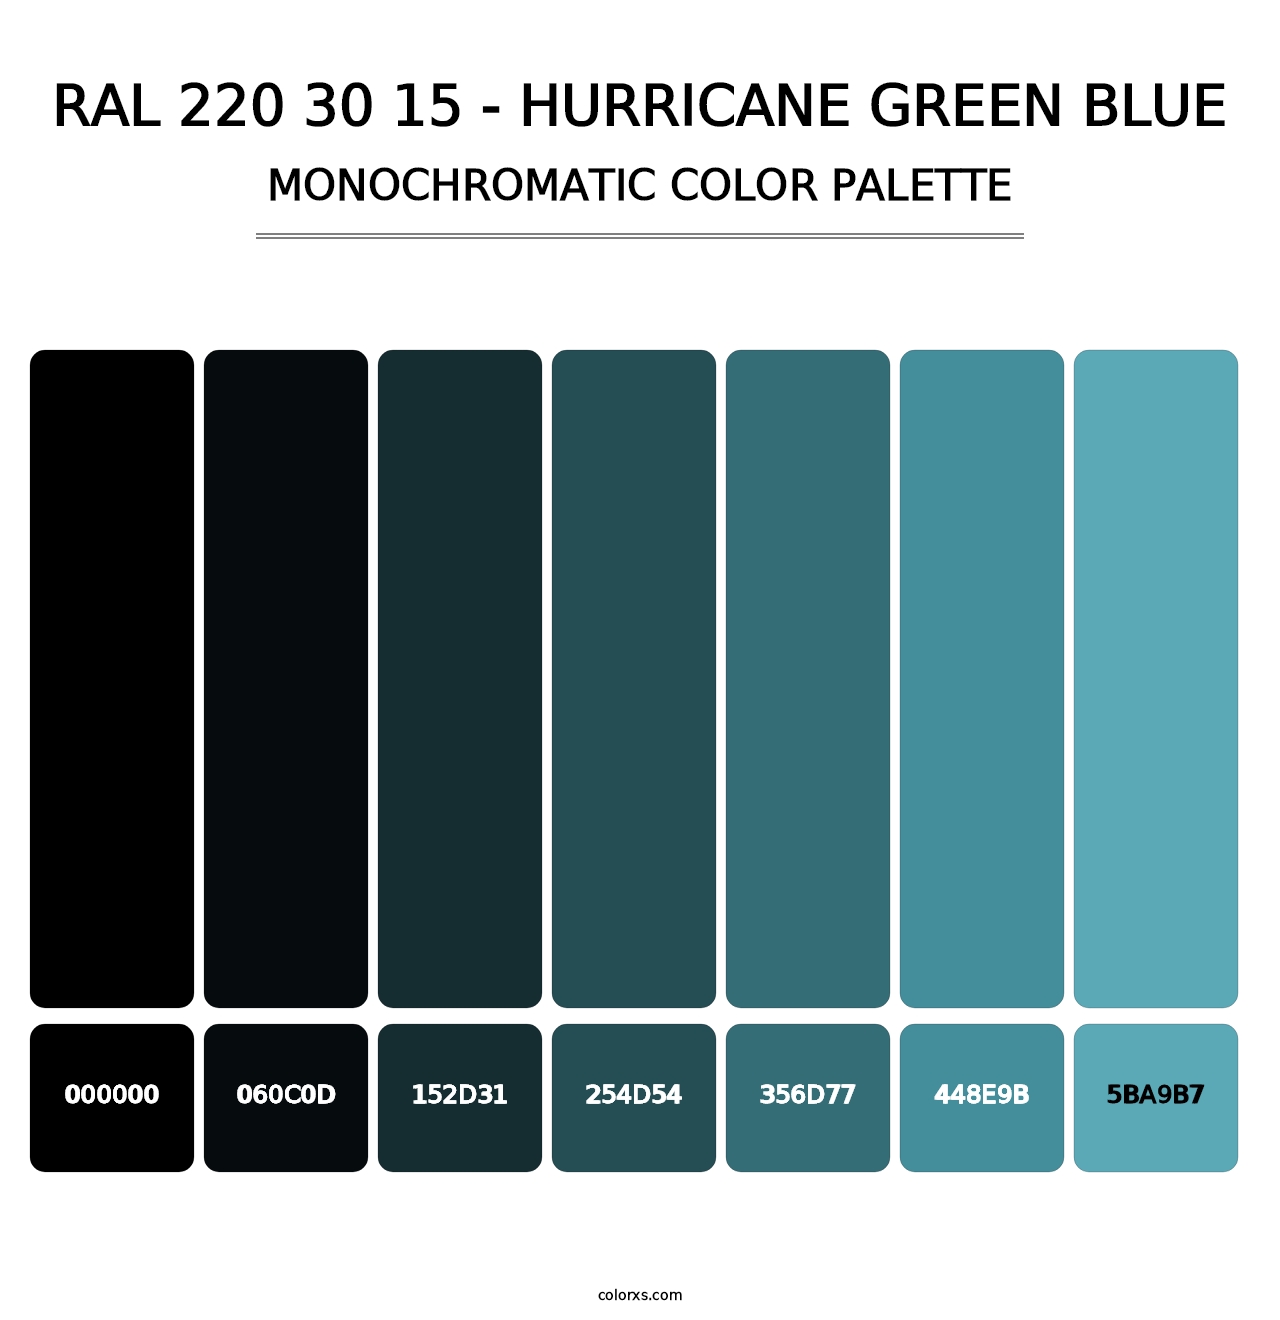 RAL 220 30 15 - Hurricane Green Blue - Monochromatic Color Palette